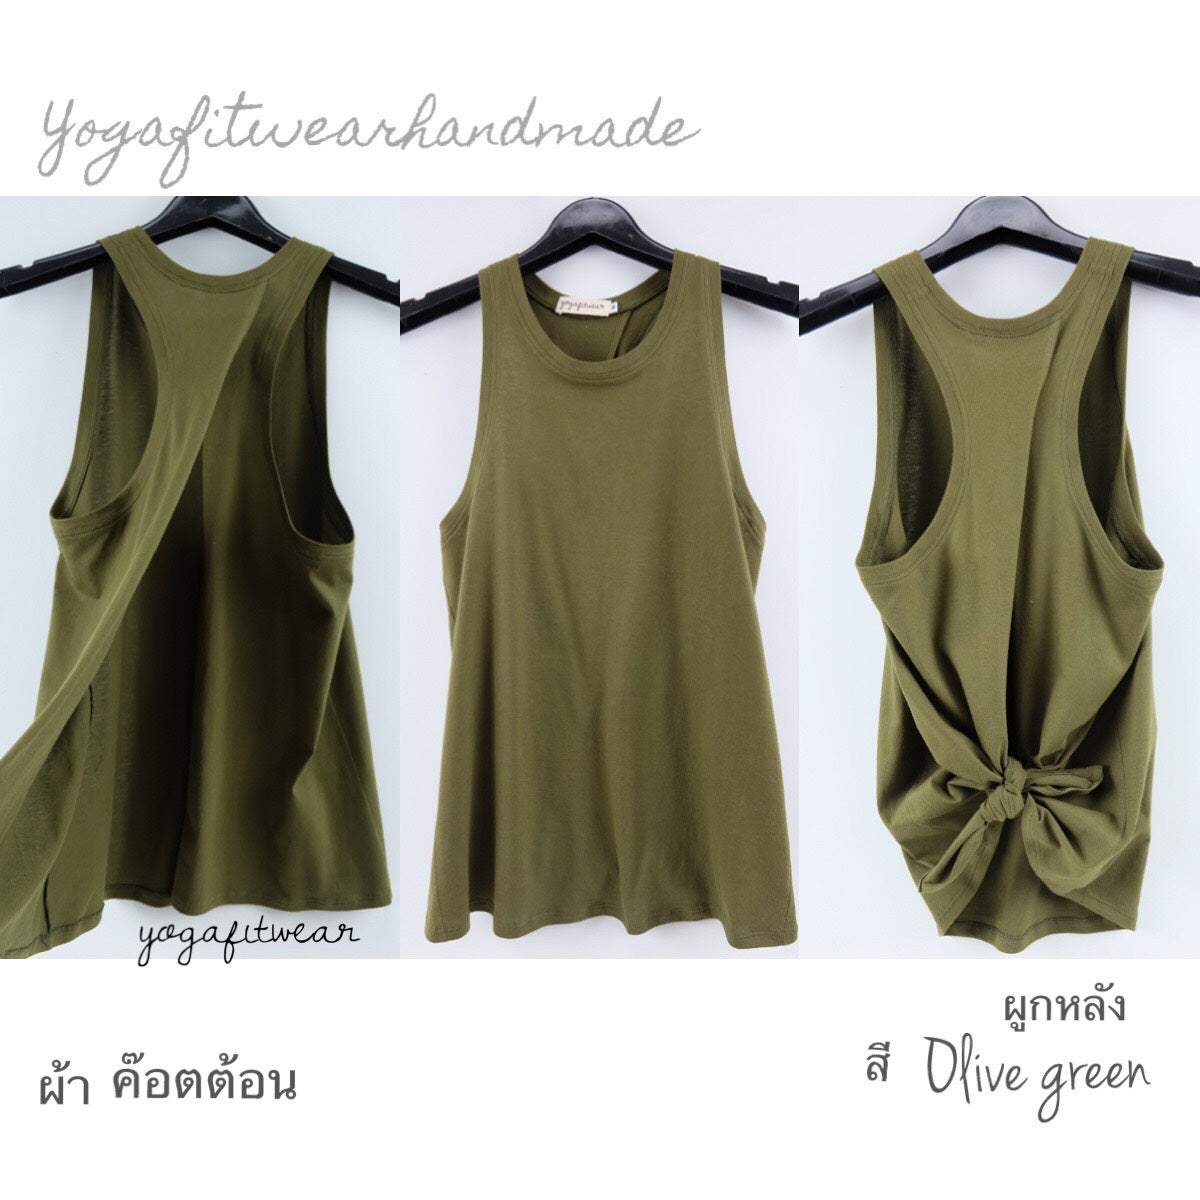 Yogafitwear Handmade Tank : เสื้อกล้าม ผูกหลัง (ผ้าค๊อตต้อน) (Olive Green) (YF0019B)